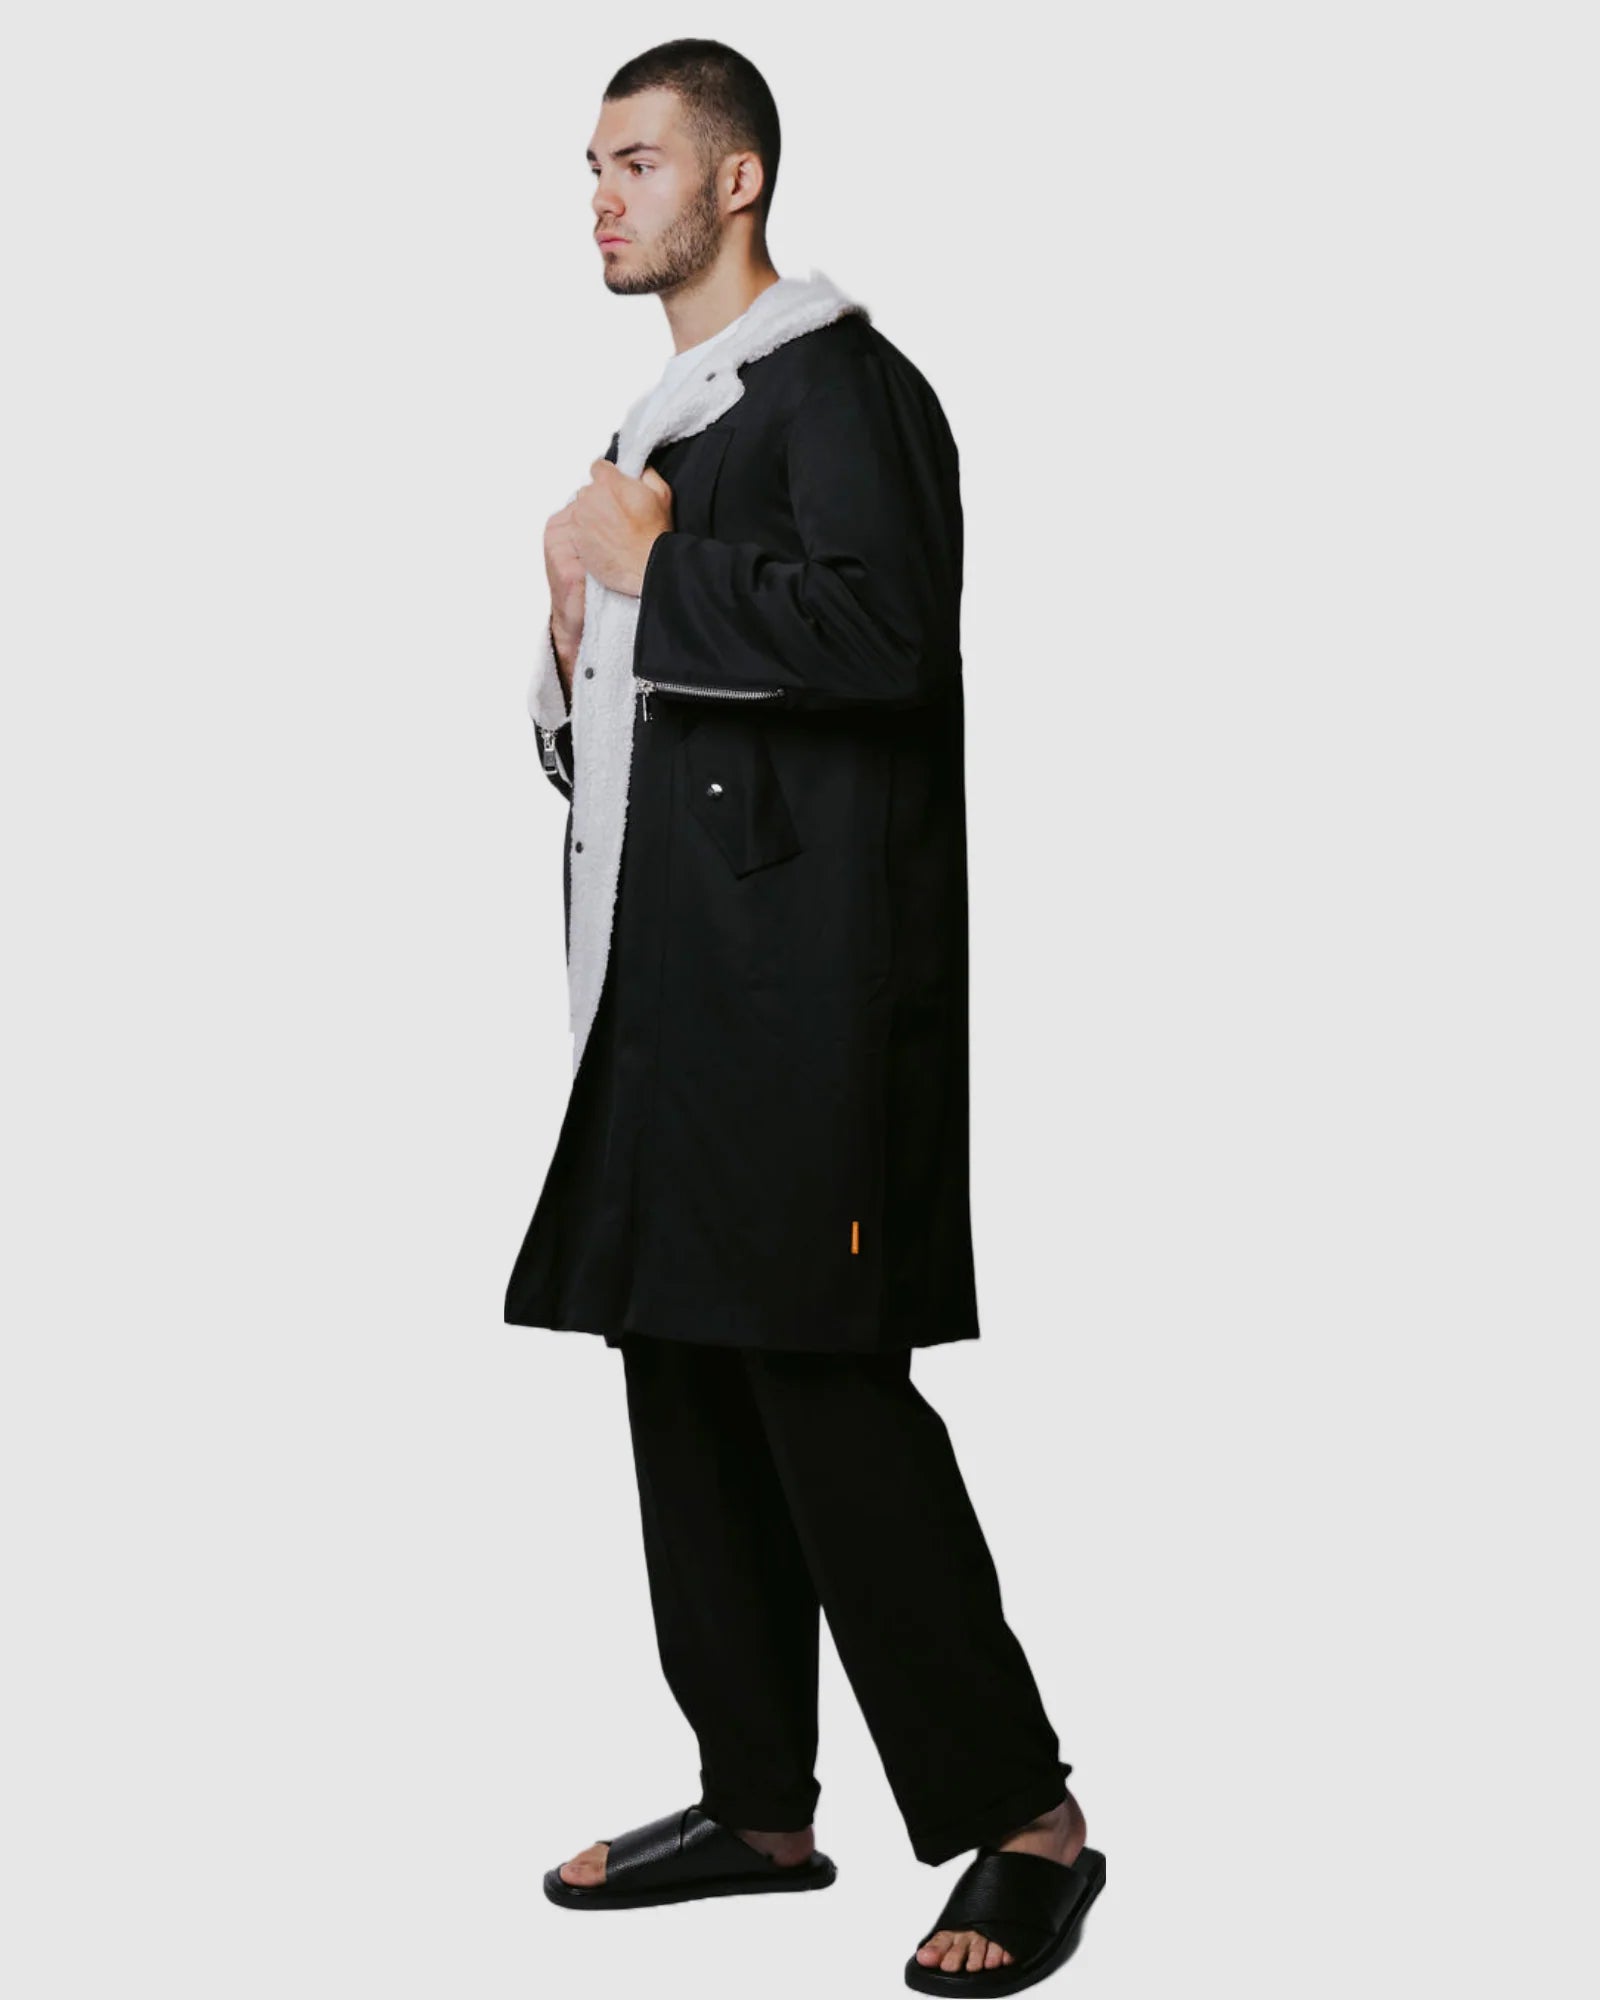 Justin Cassin Otto Trimmed Coat in Black Color 4